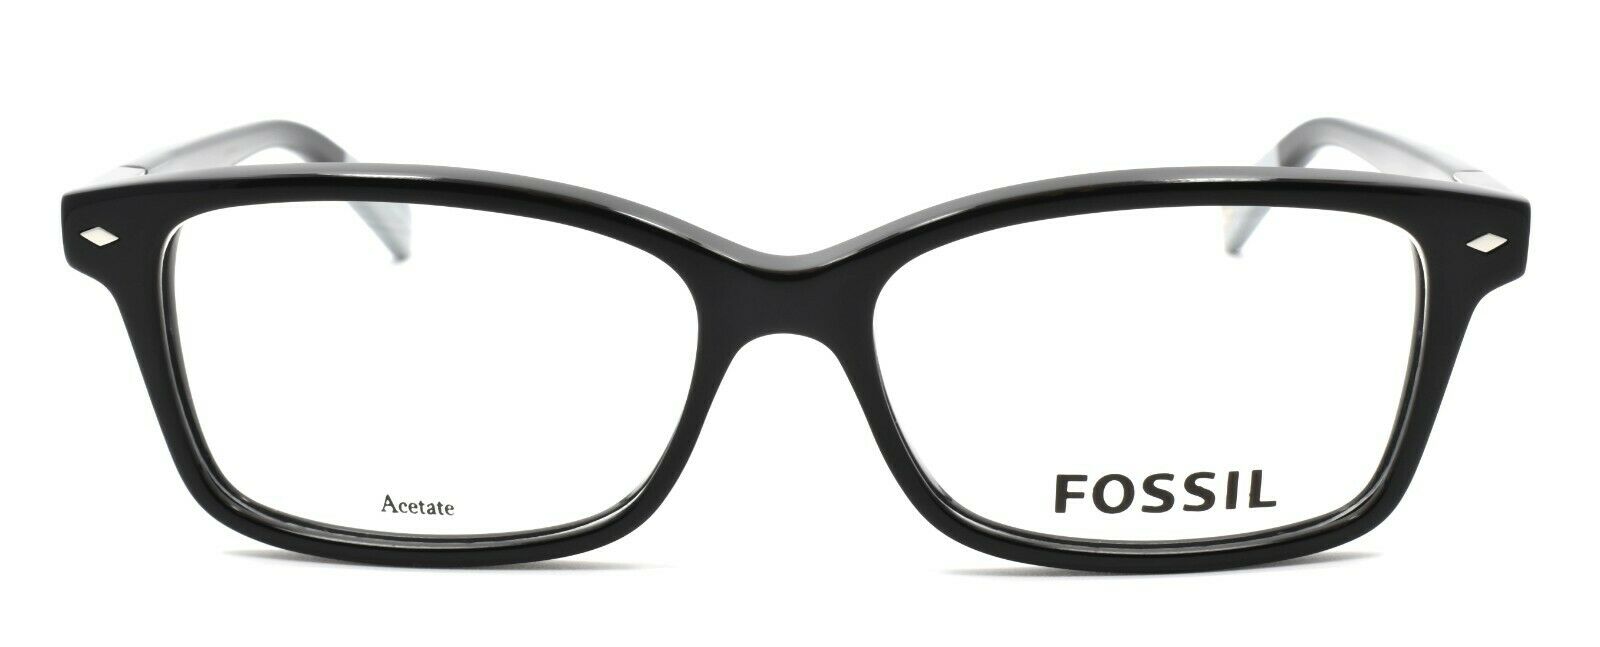 2-Fossil FOS 6047 807 Women's Eyeglasses Frames 52-15-140 Black + CASE-716737680681-IKSpecs